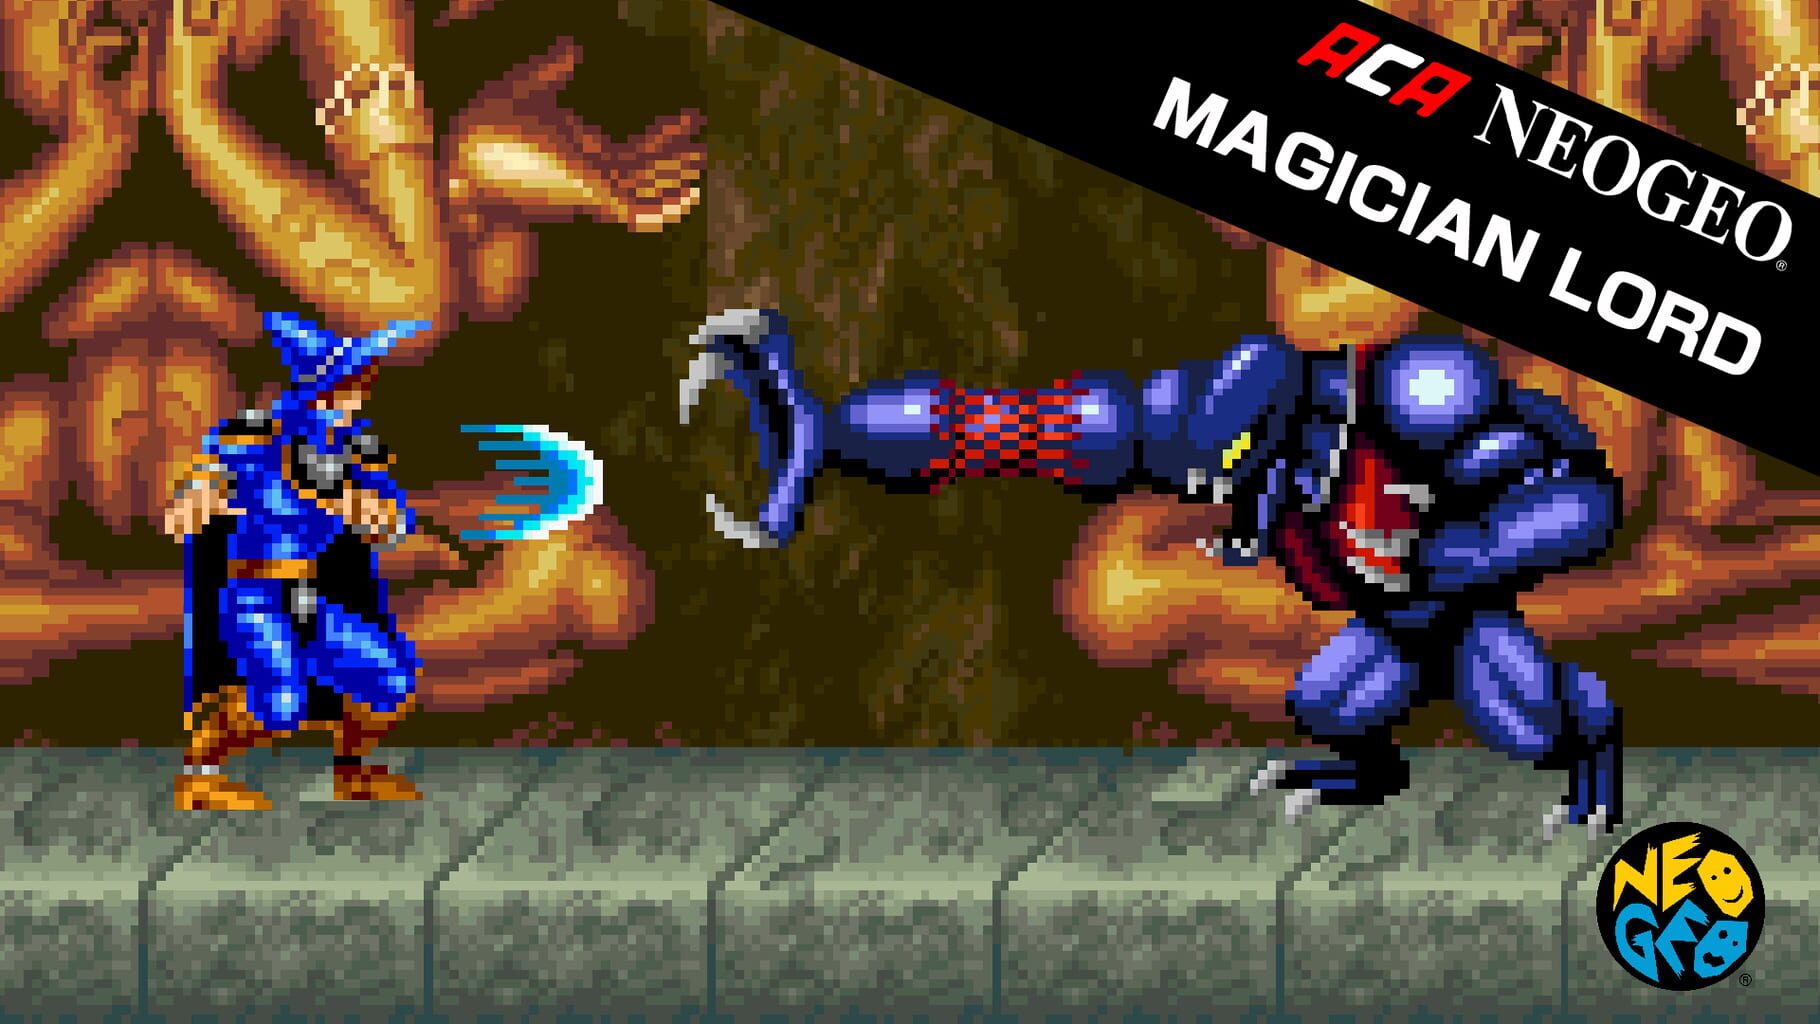 ACA Neo Geo: Magician Lord artwork